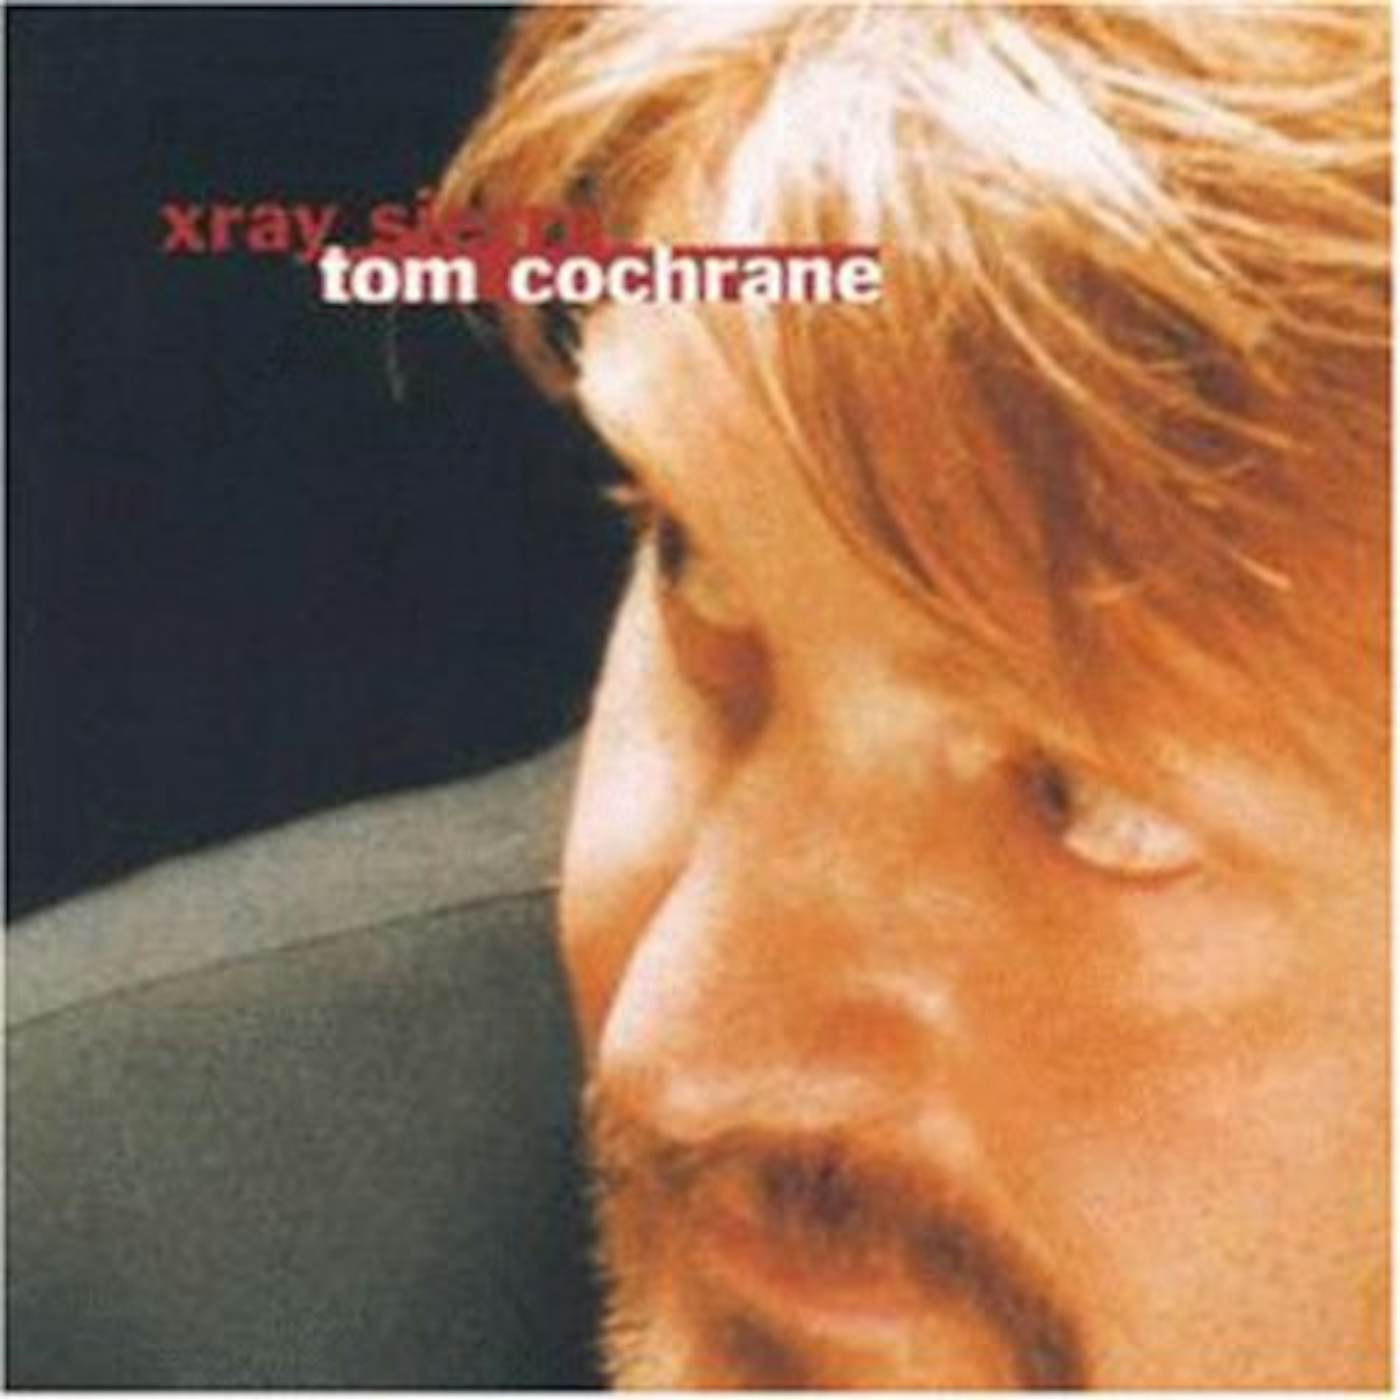 Tom Cochrane X-RAY SIERRA CD